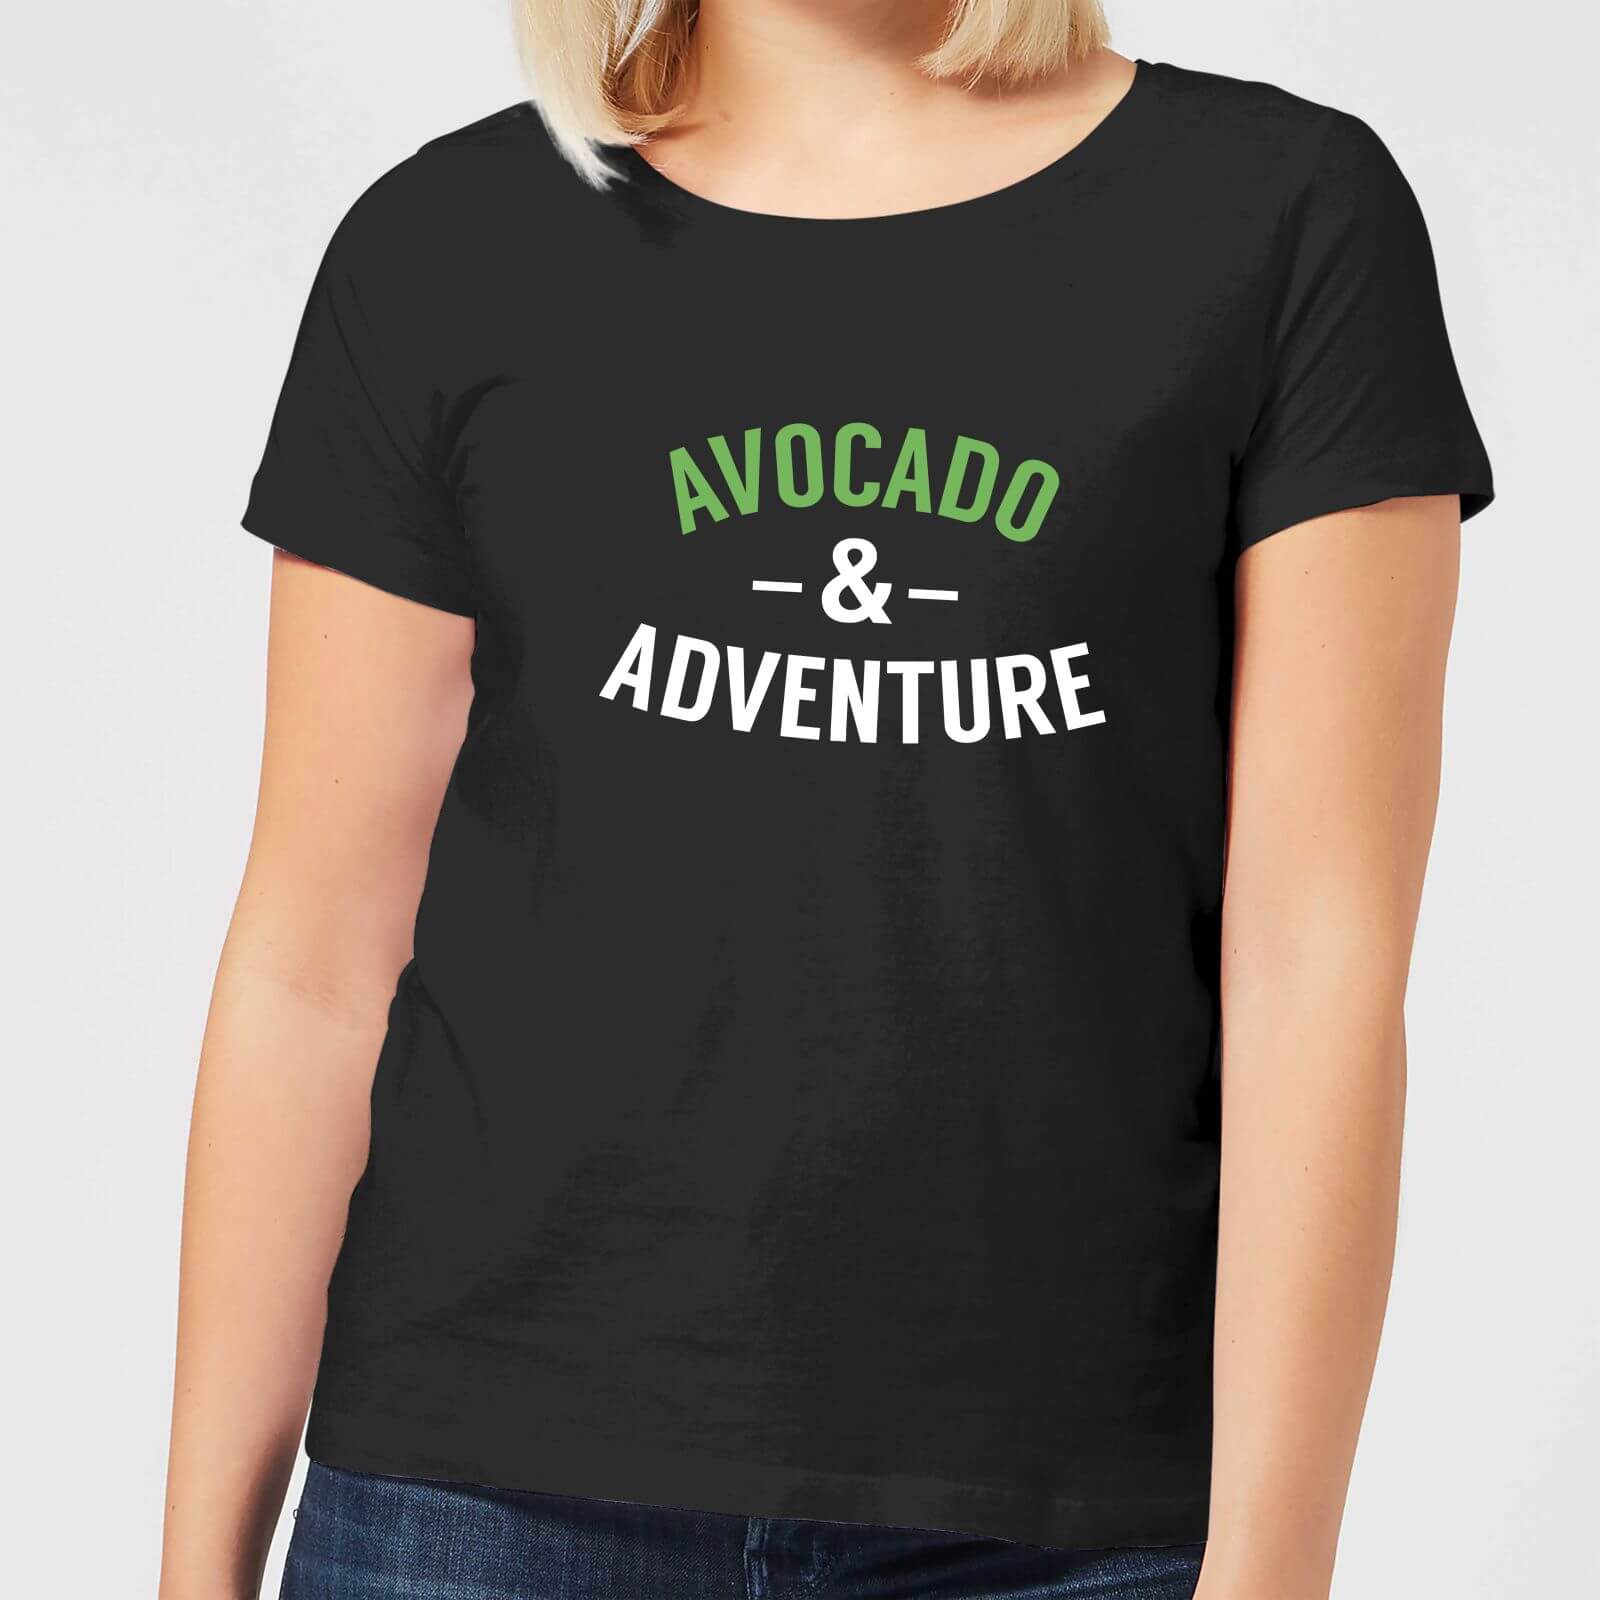 Avocado and Adventure Women's T-Shirt - Black - 4XL - Black